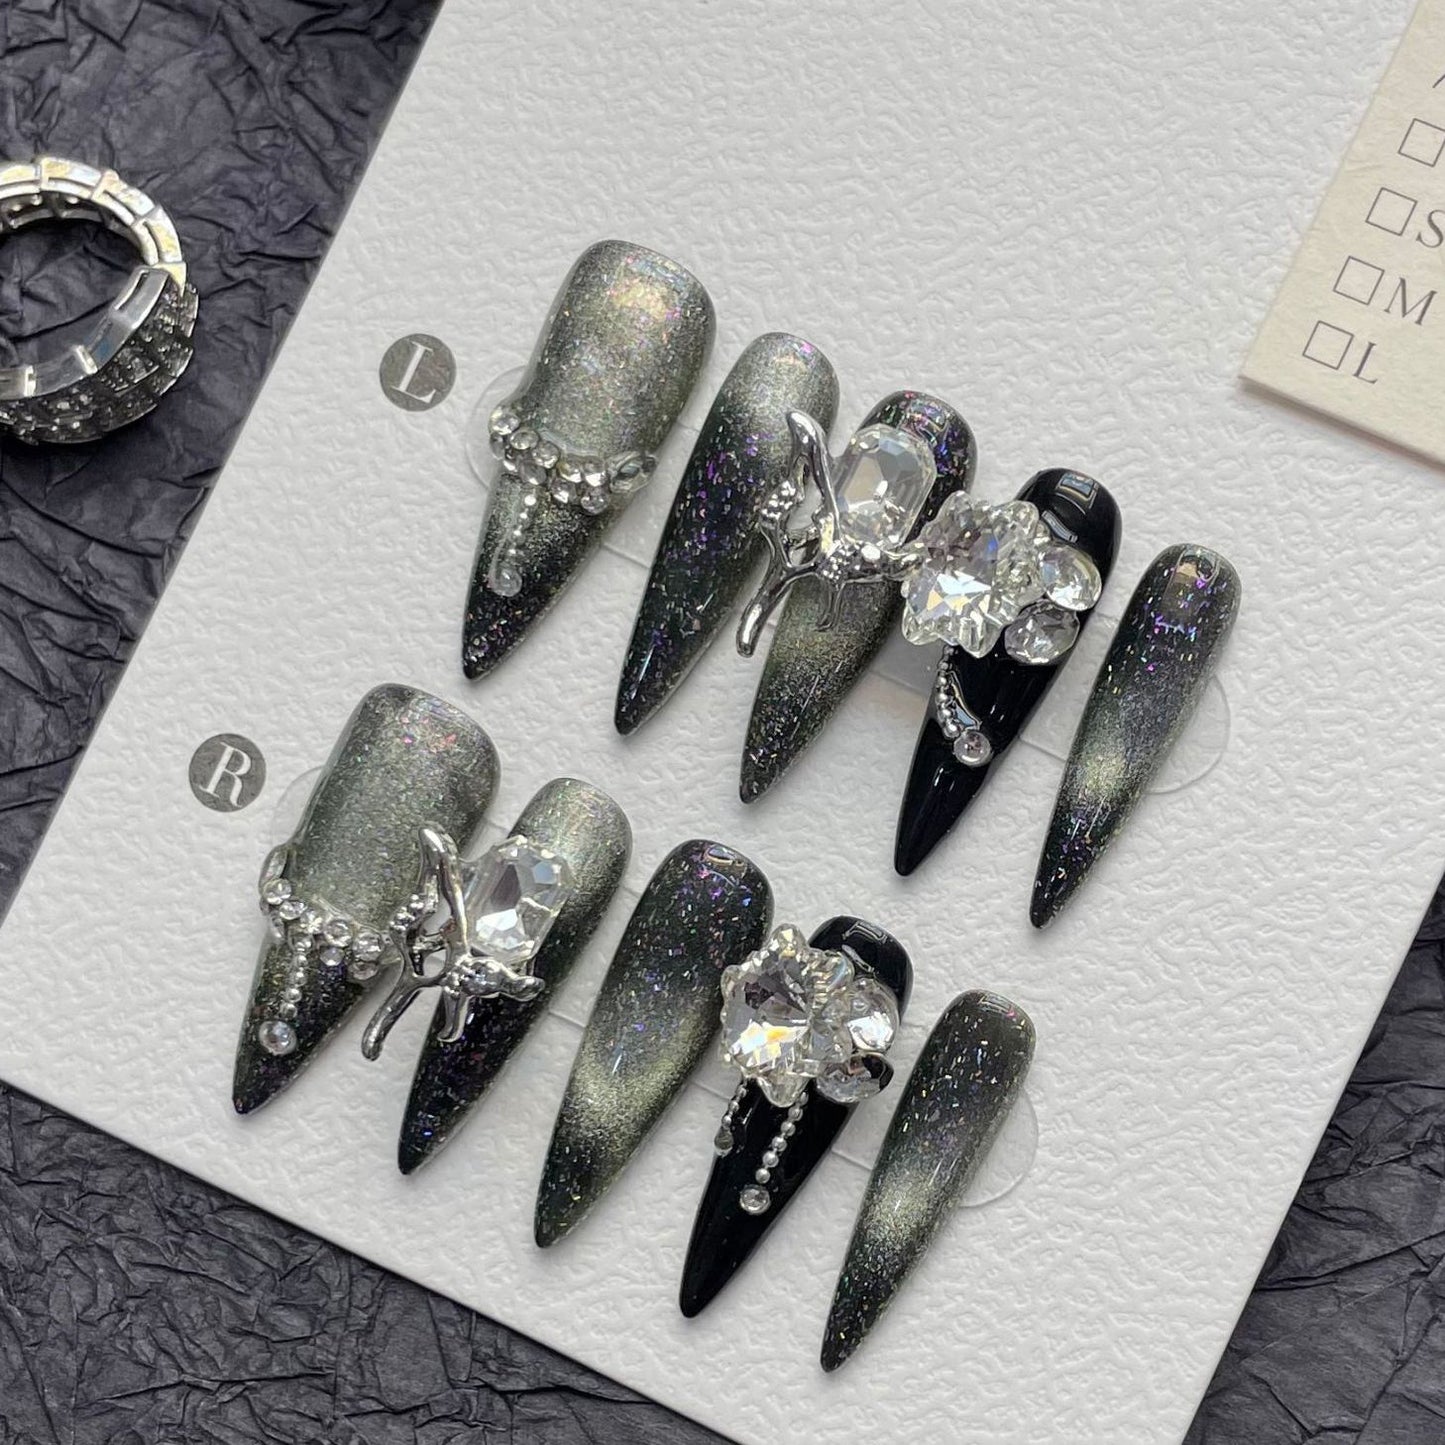 1268 Silver gray cat's eyes style press on nails 100% handmade false nails black sliver